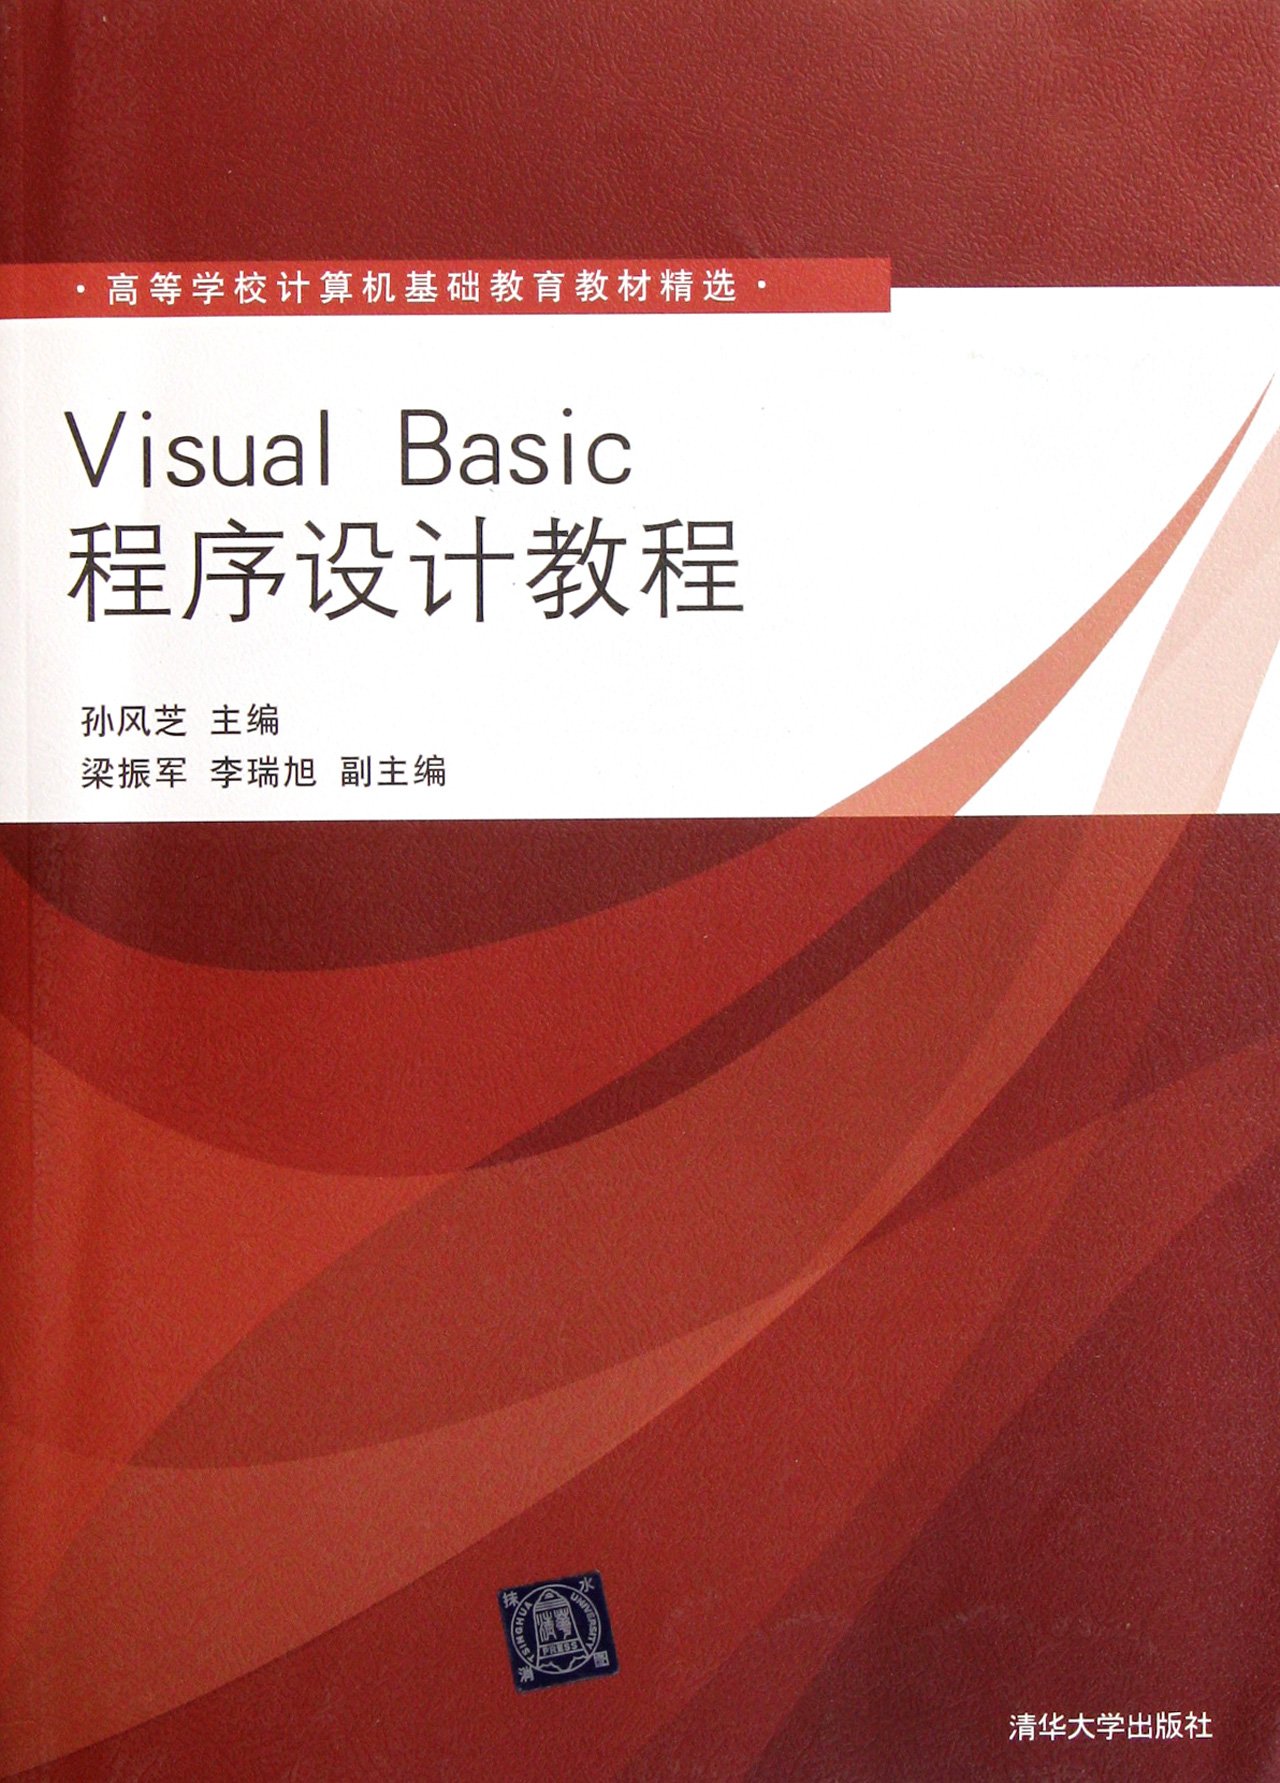 Visual Basic程式設計教程(2012年1月清華大學出版社出版的圖書)